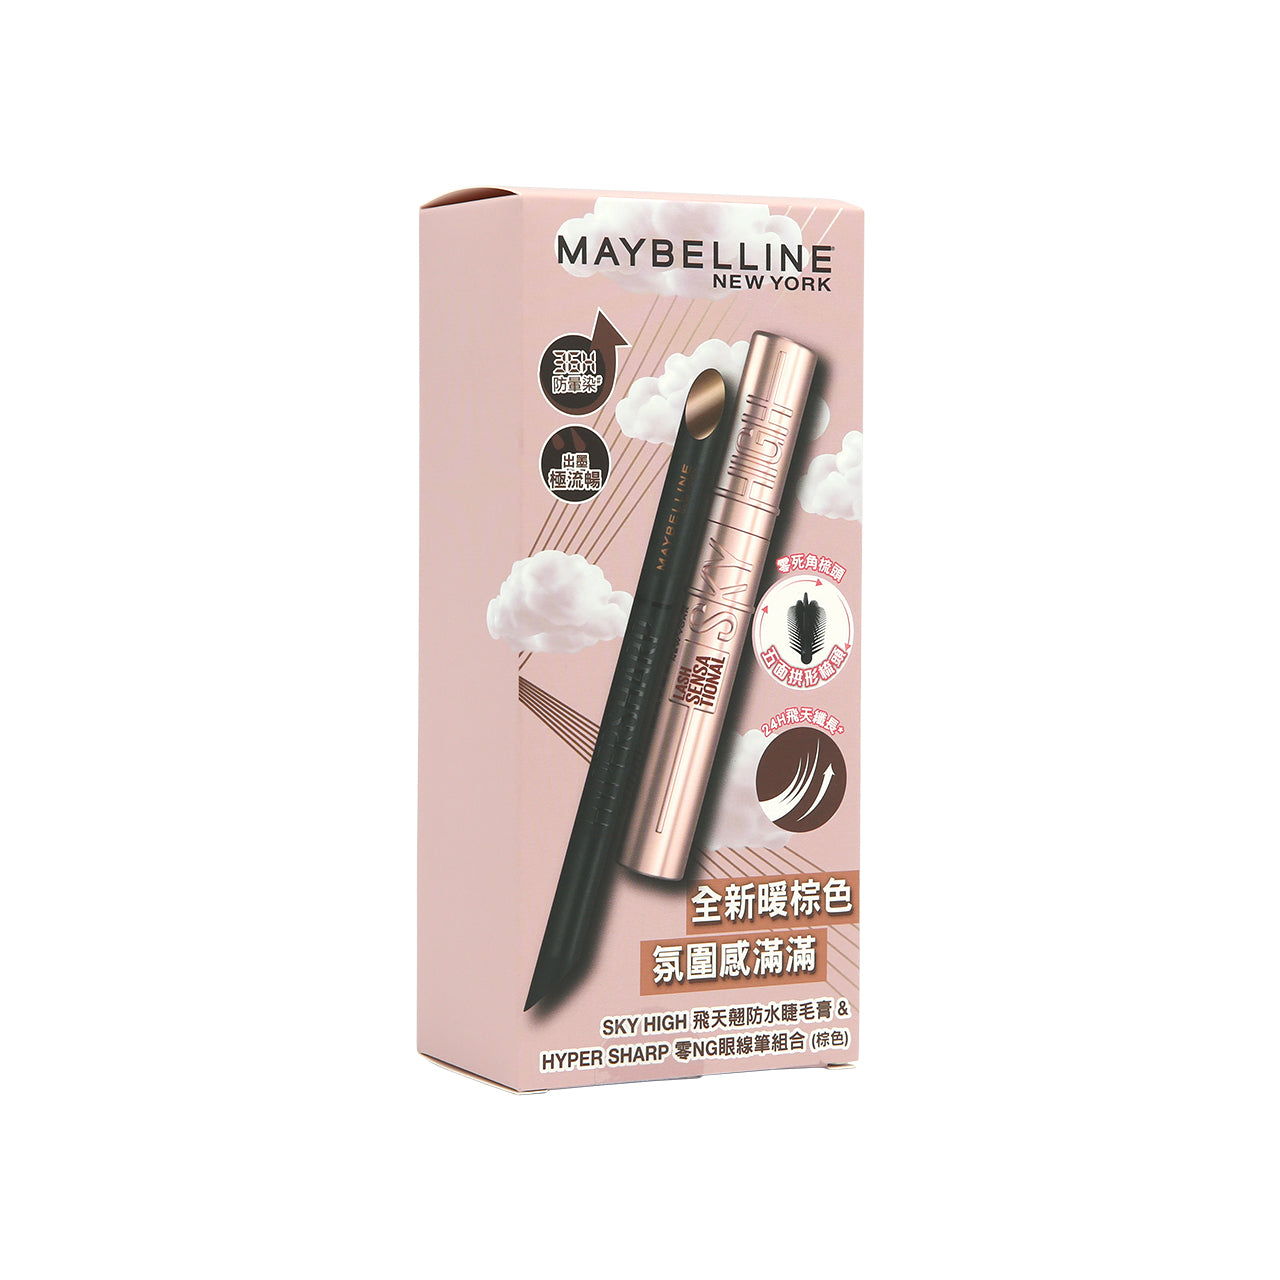 Maybelline Sky High Mascara & Hyper Sharp Extreme Liner Set (Warm Brown) 2pcs | Sasa Global eShop